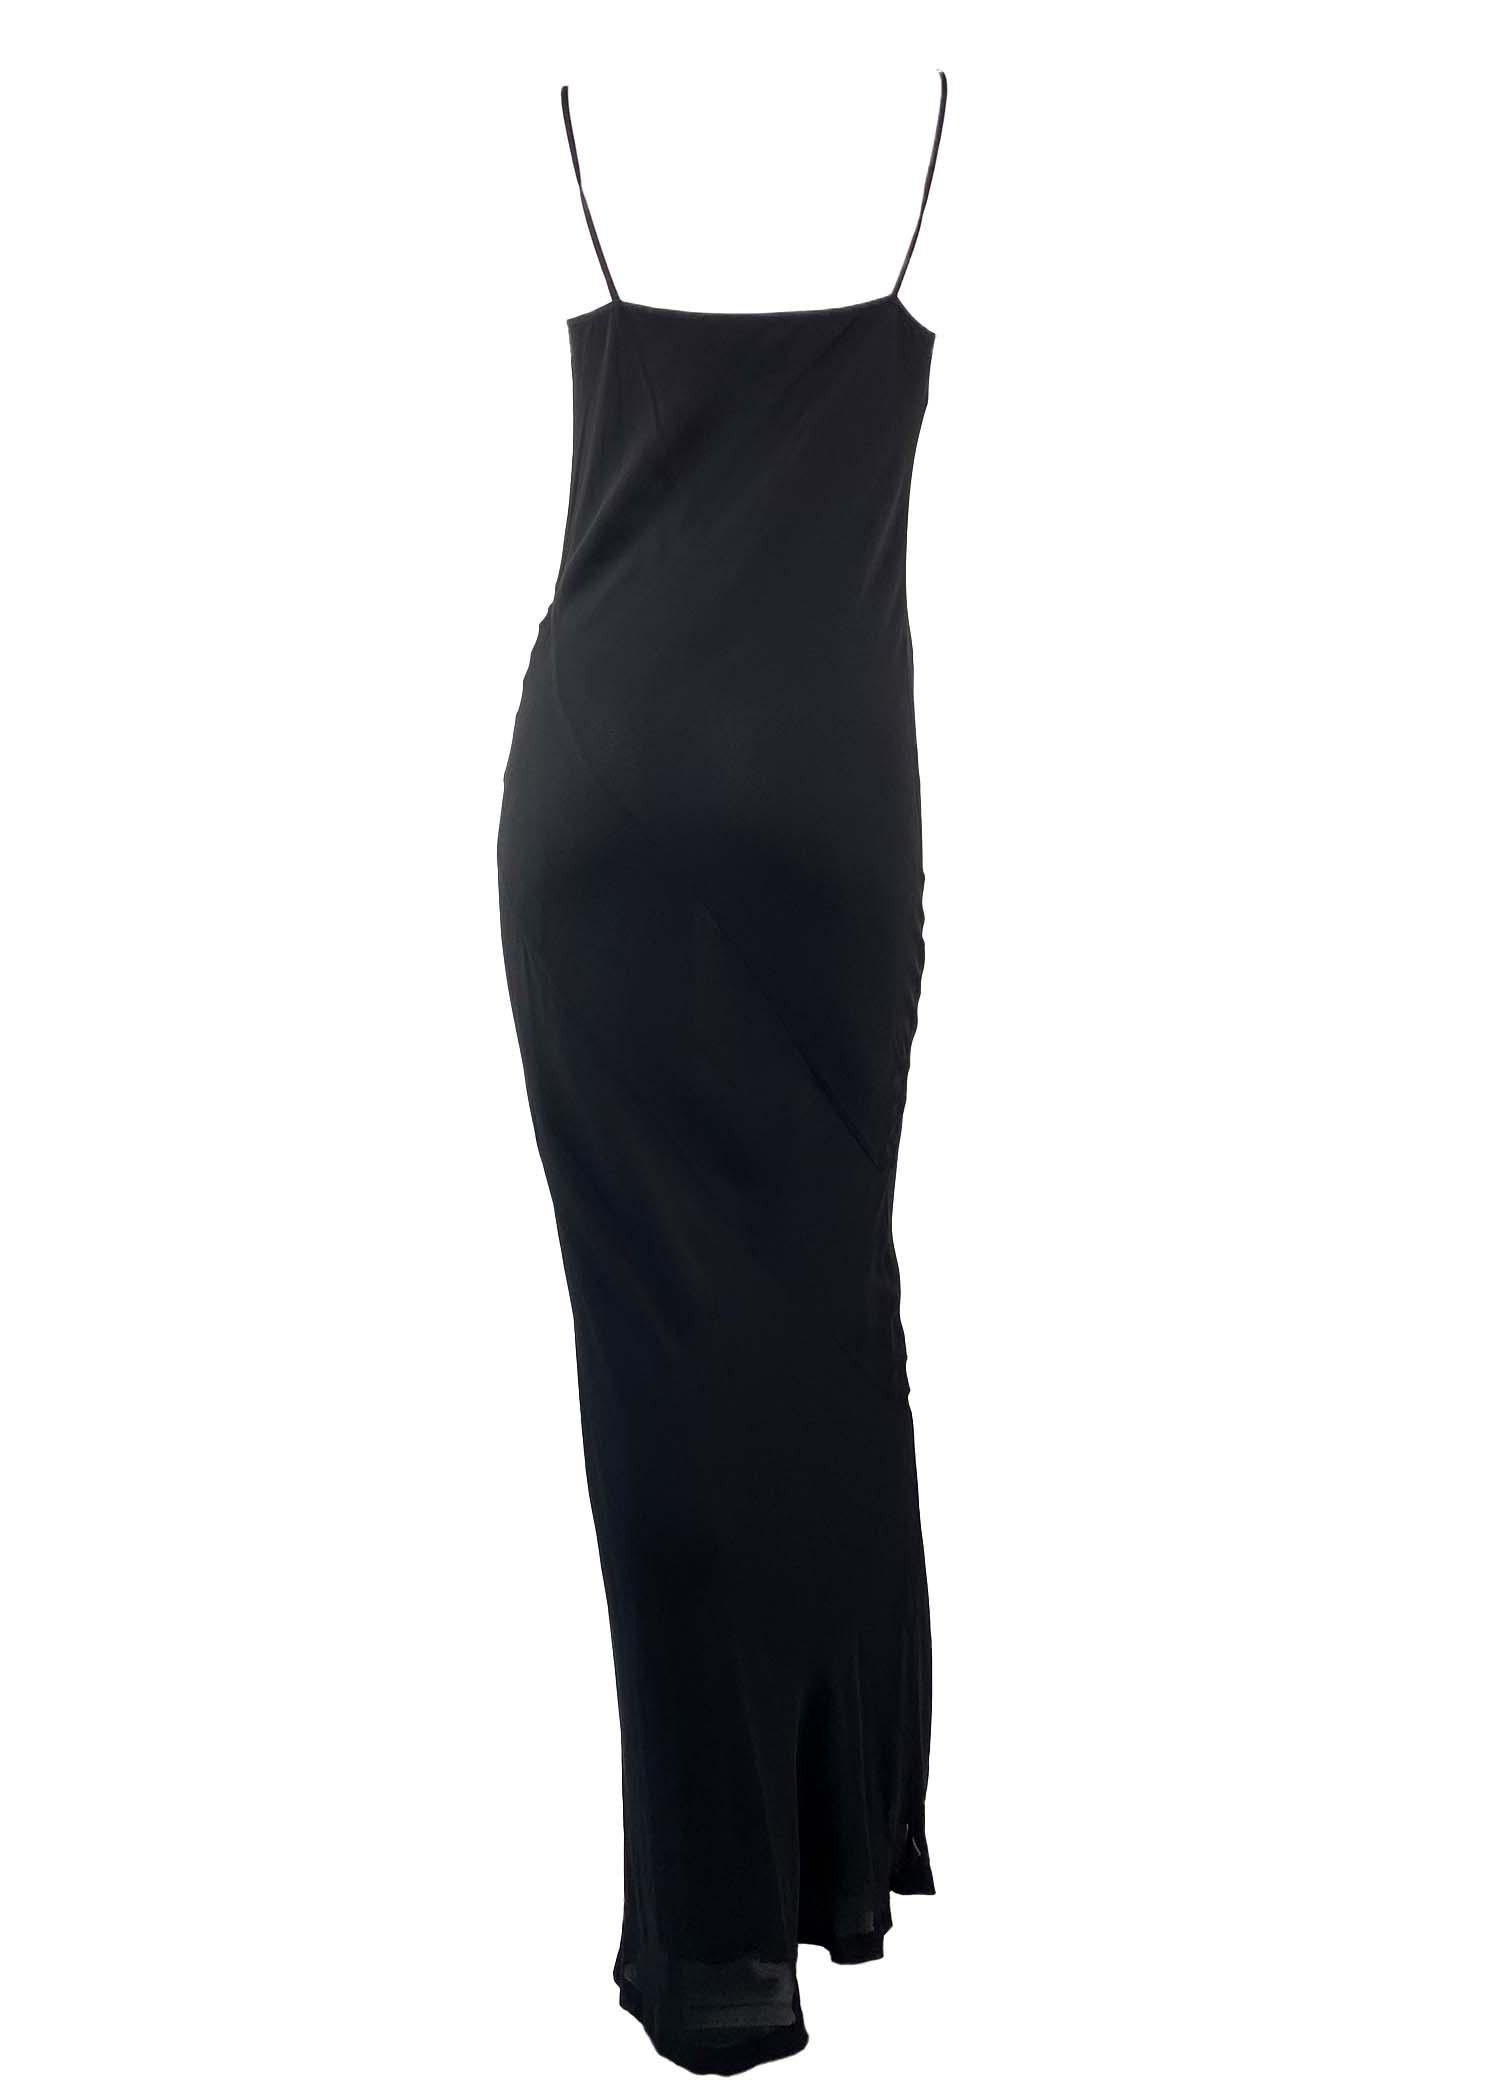 S/S 1997 Gucci by Tom Ford Black Diagonal Cut Sheer Silk Column Dress Slip For Sale 2